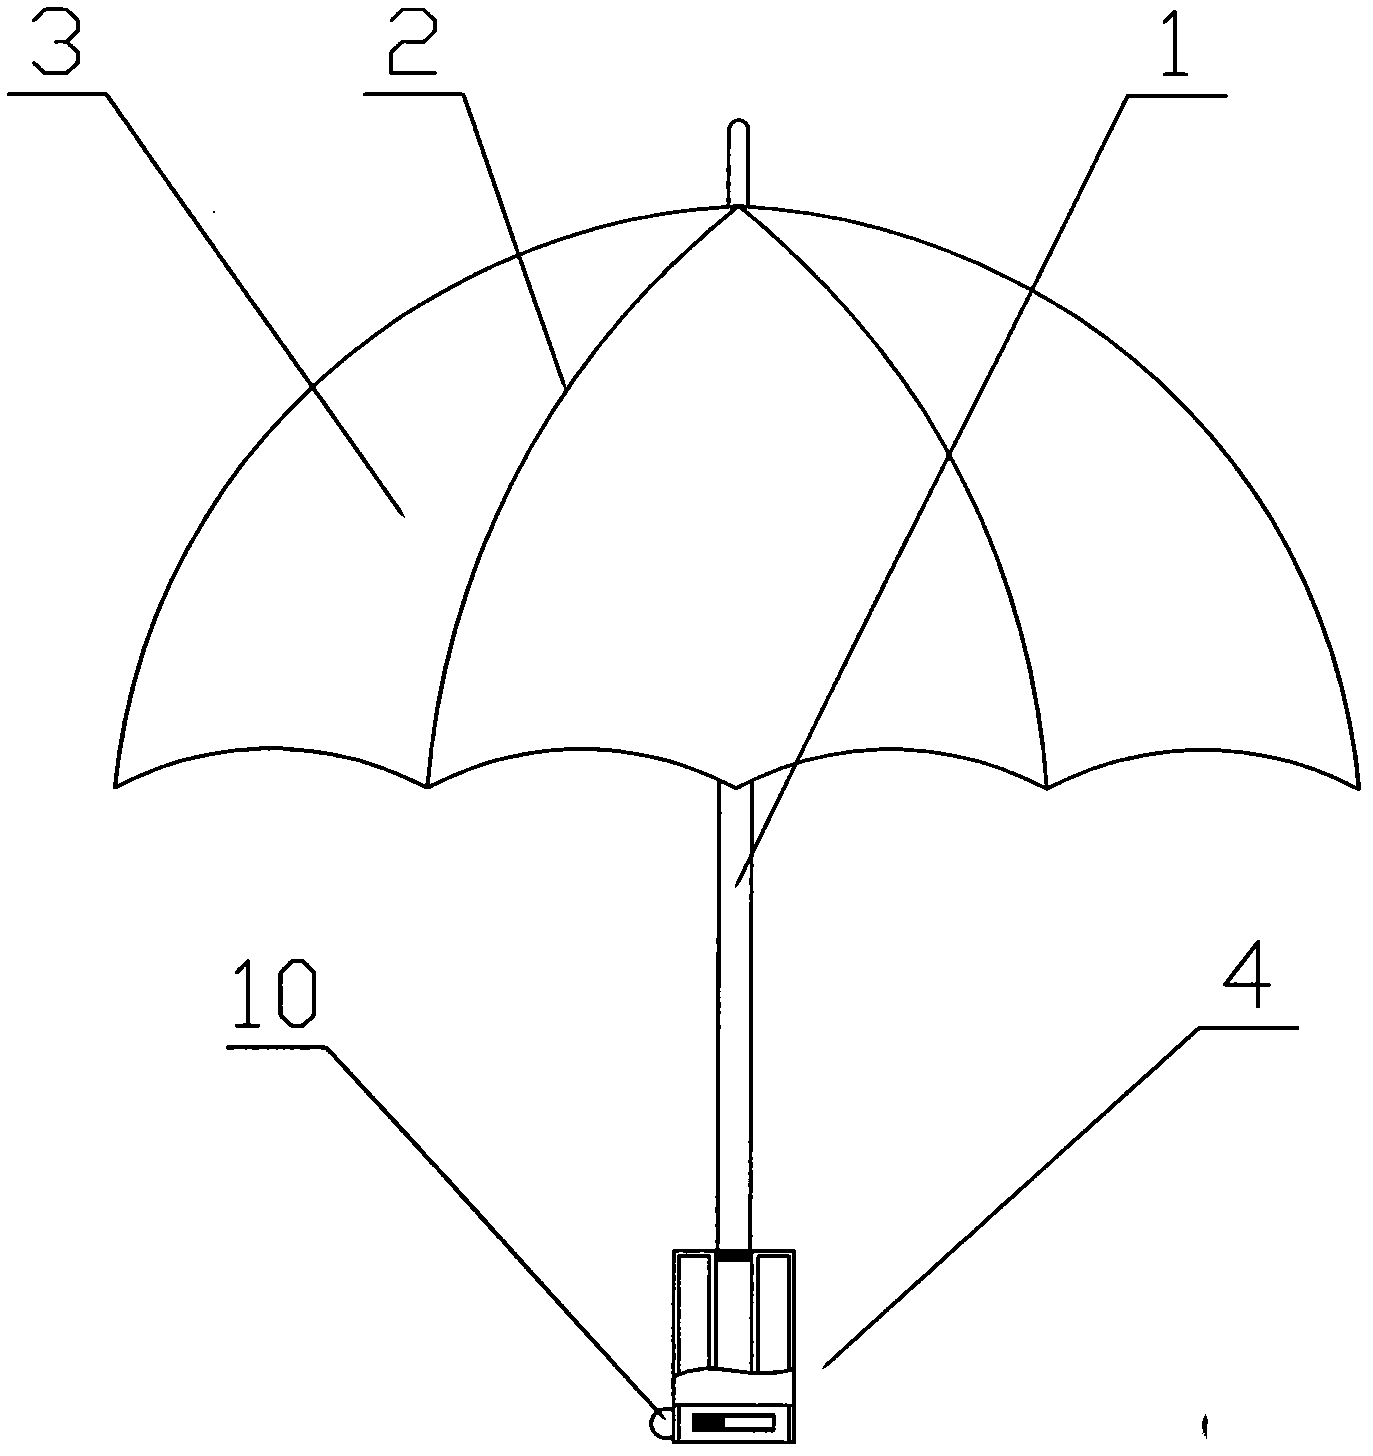 Illumination umbrella with storage chamber